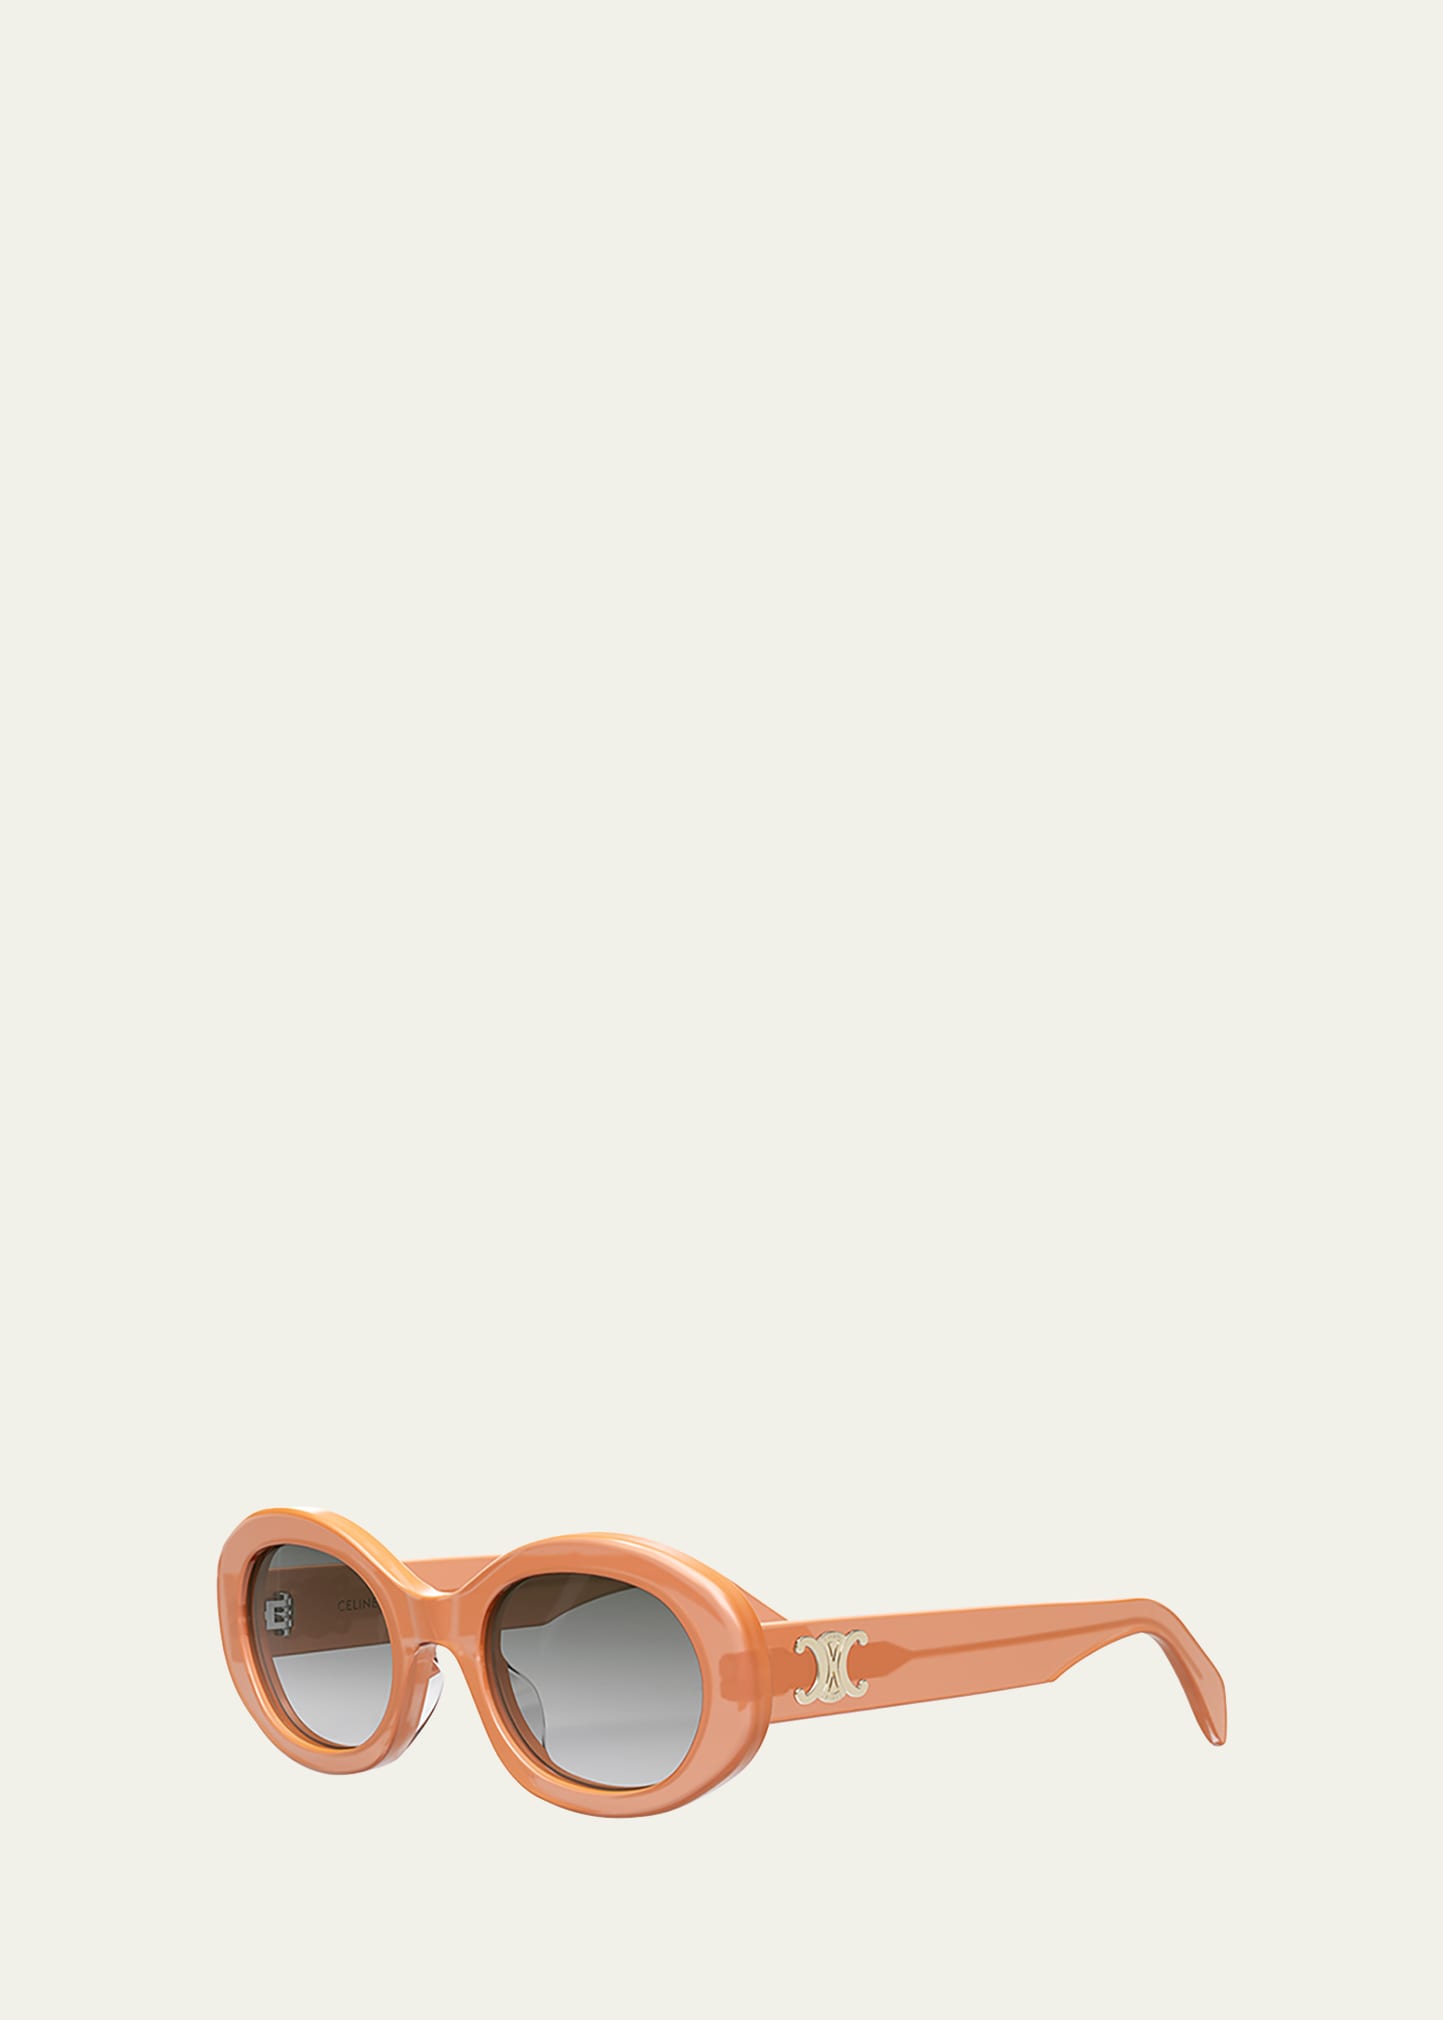 Celine Triomphe Oval Acetate Sunglasses In Orange/gray Gradient